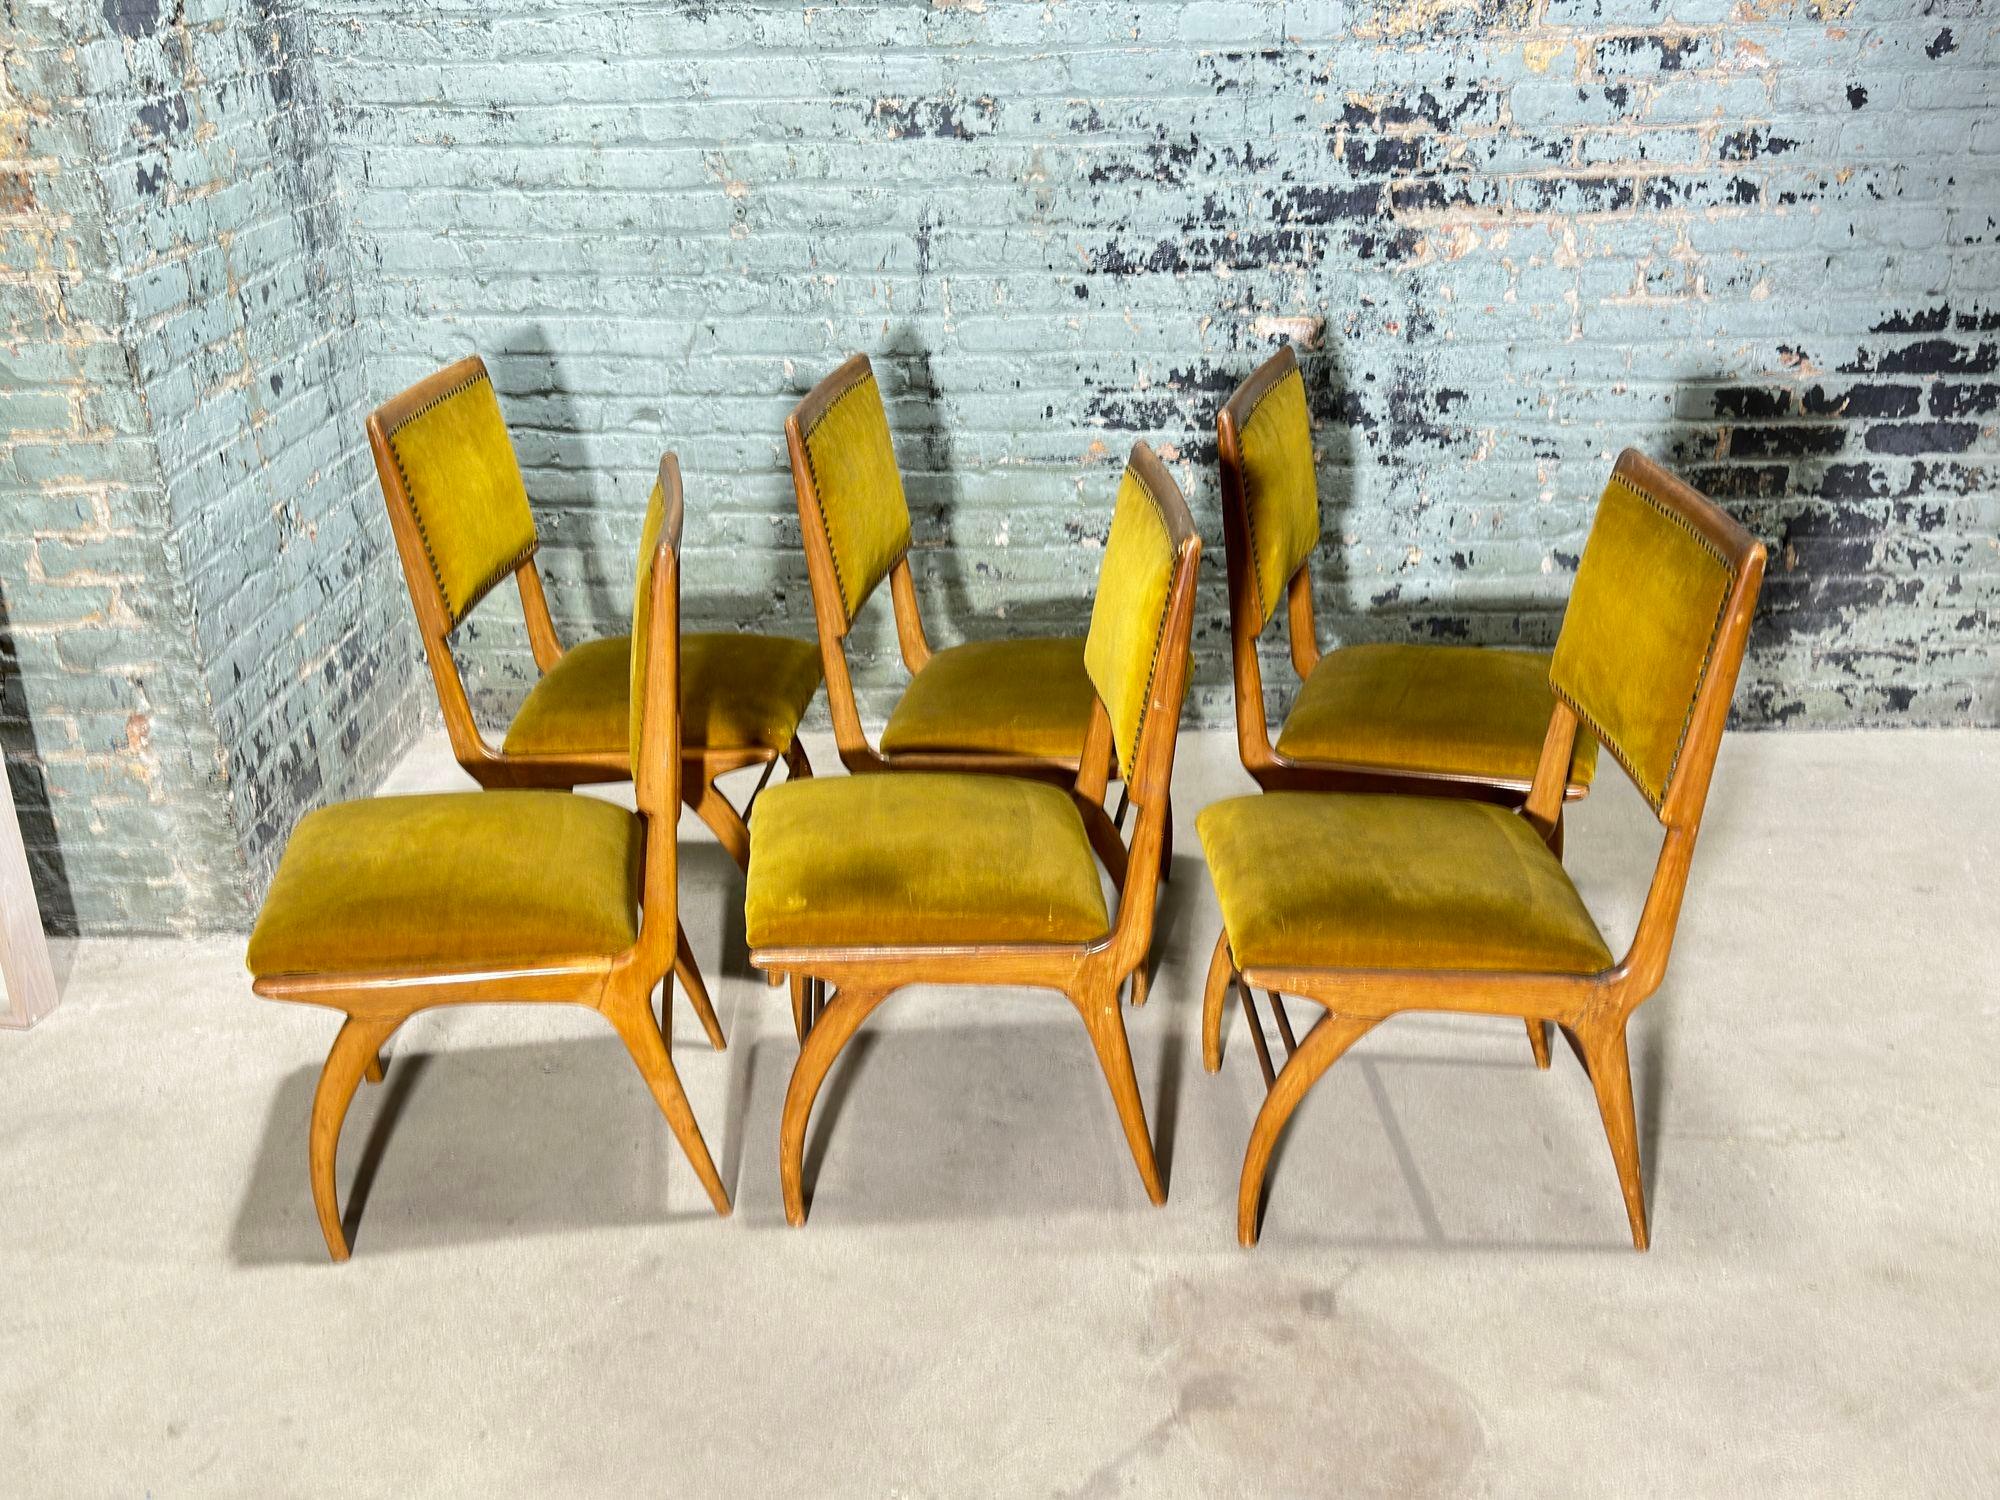 Set of 6 Jacaranda Dining Chairs, Moveis Brazil 1960. Original velvet fabric.
Measure 35